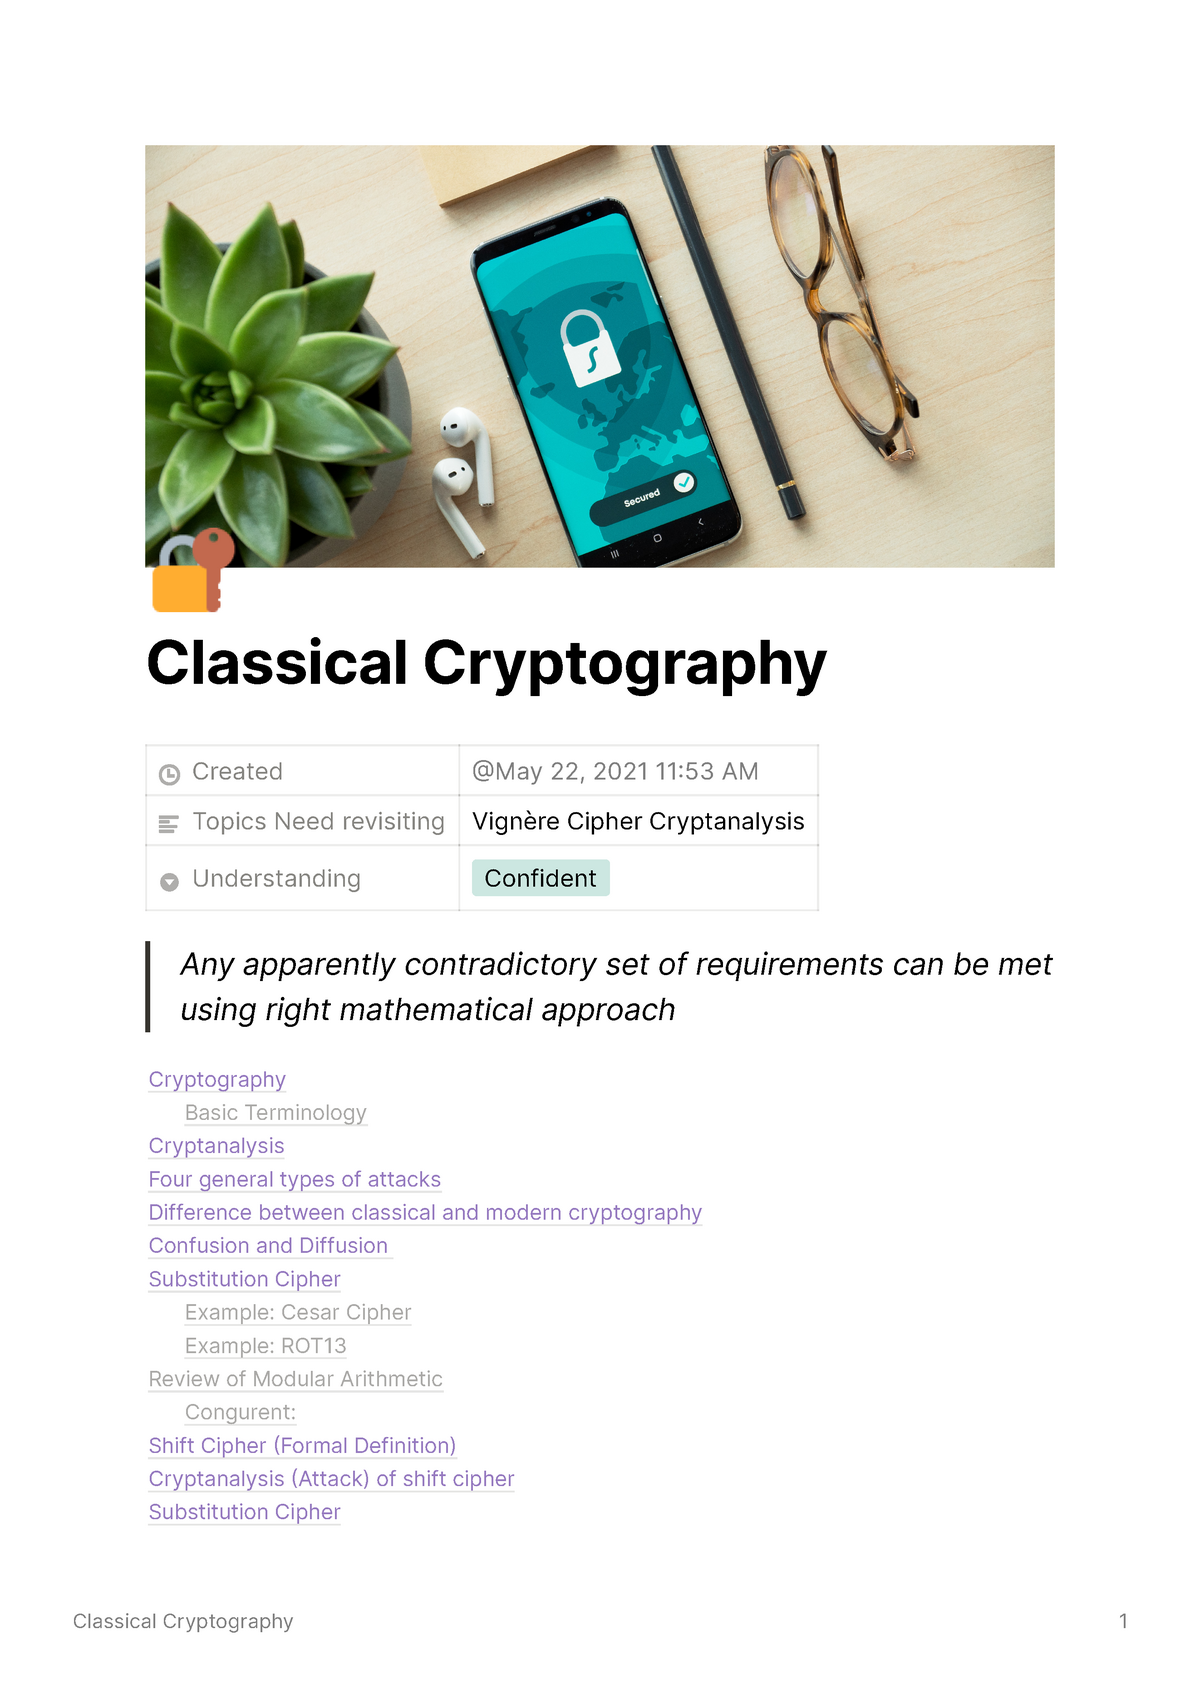 cryptography essay topics